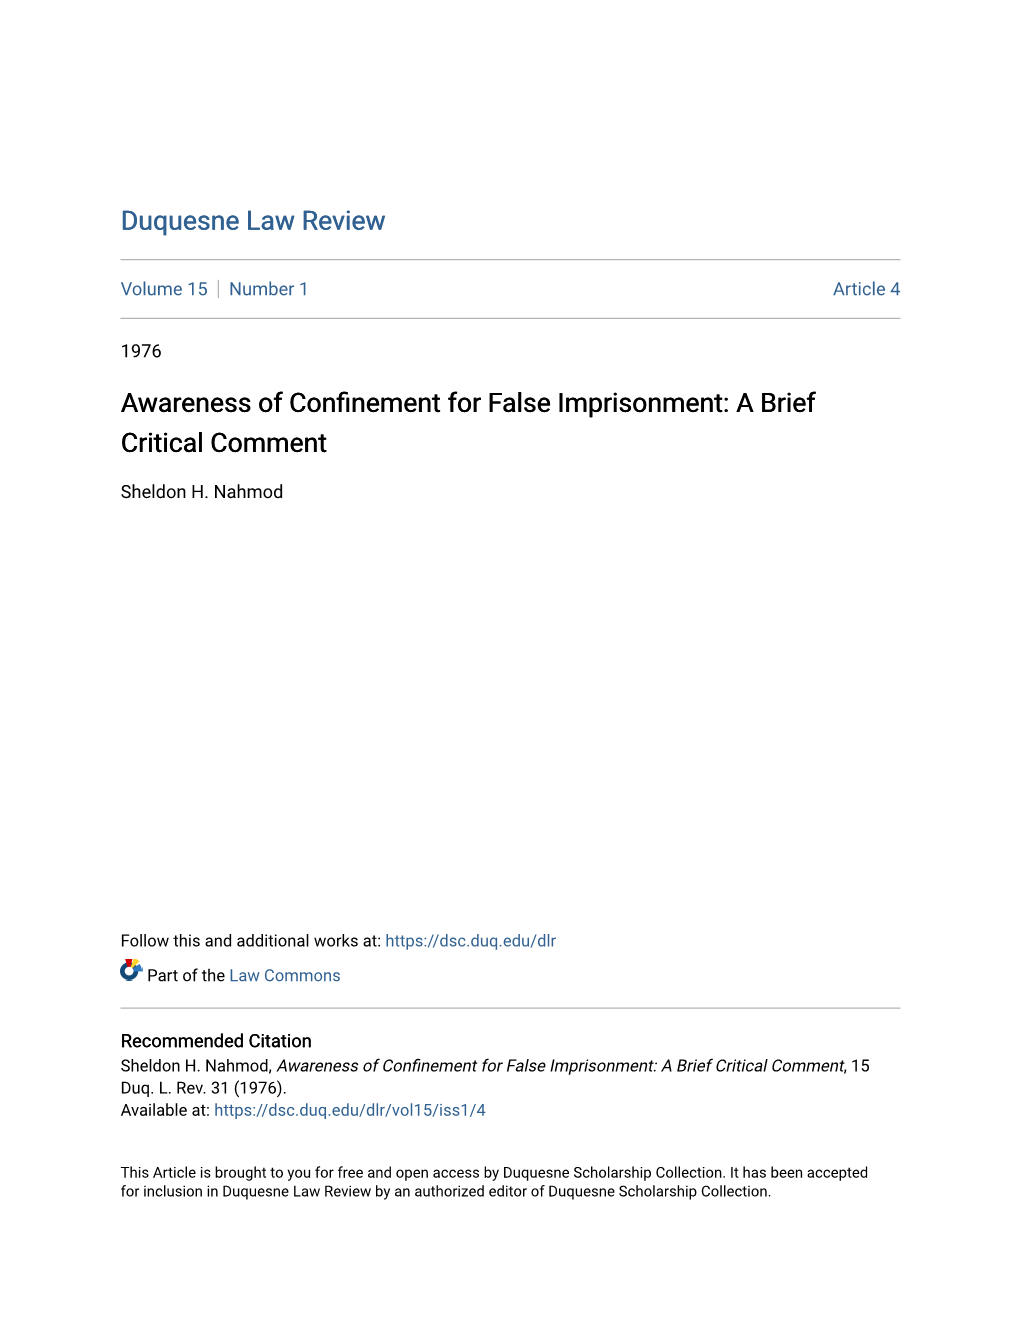 Awareness of Confinement for False Imprisonment: a Brief Critical Comment